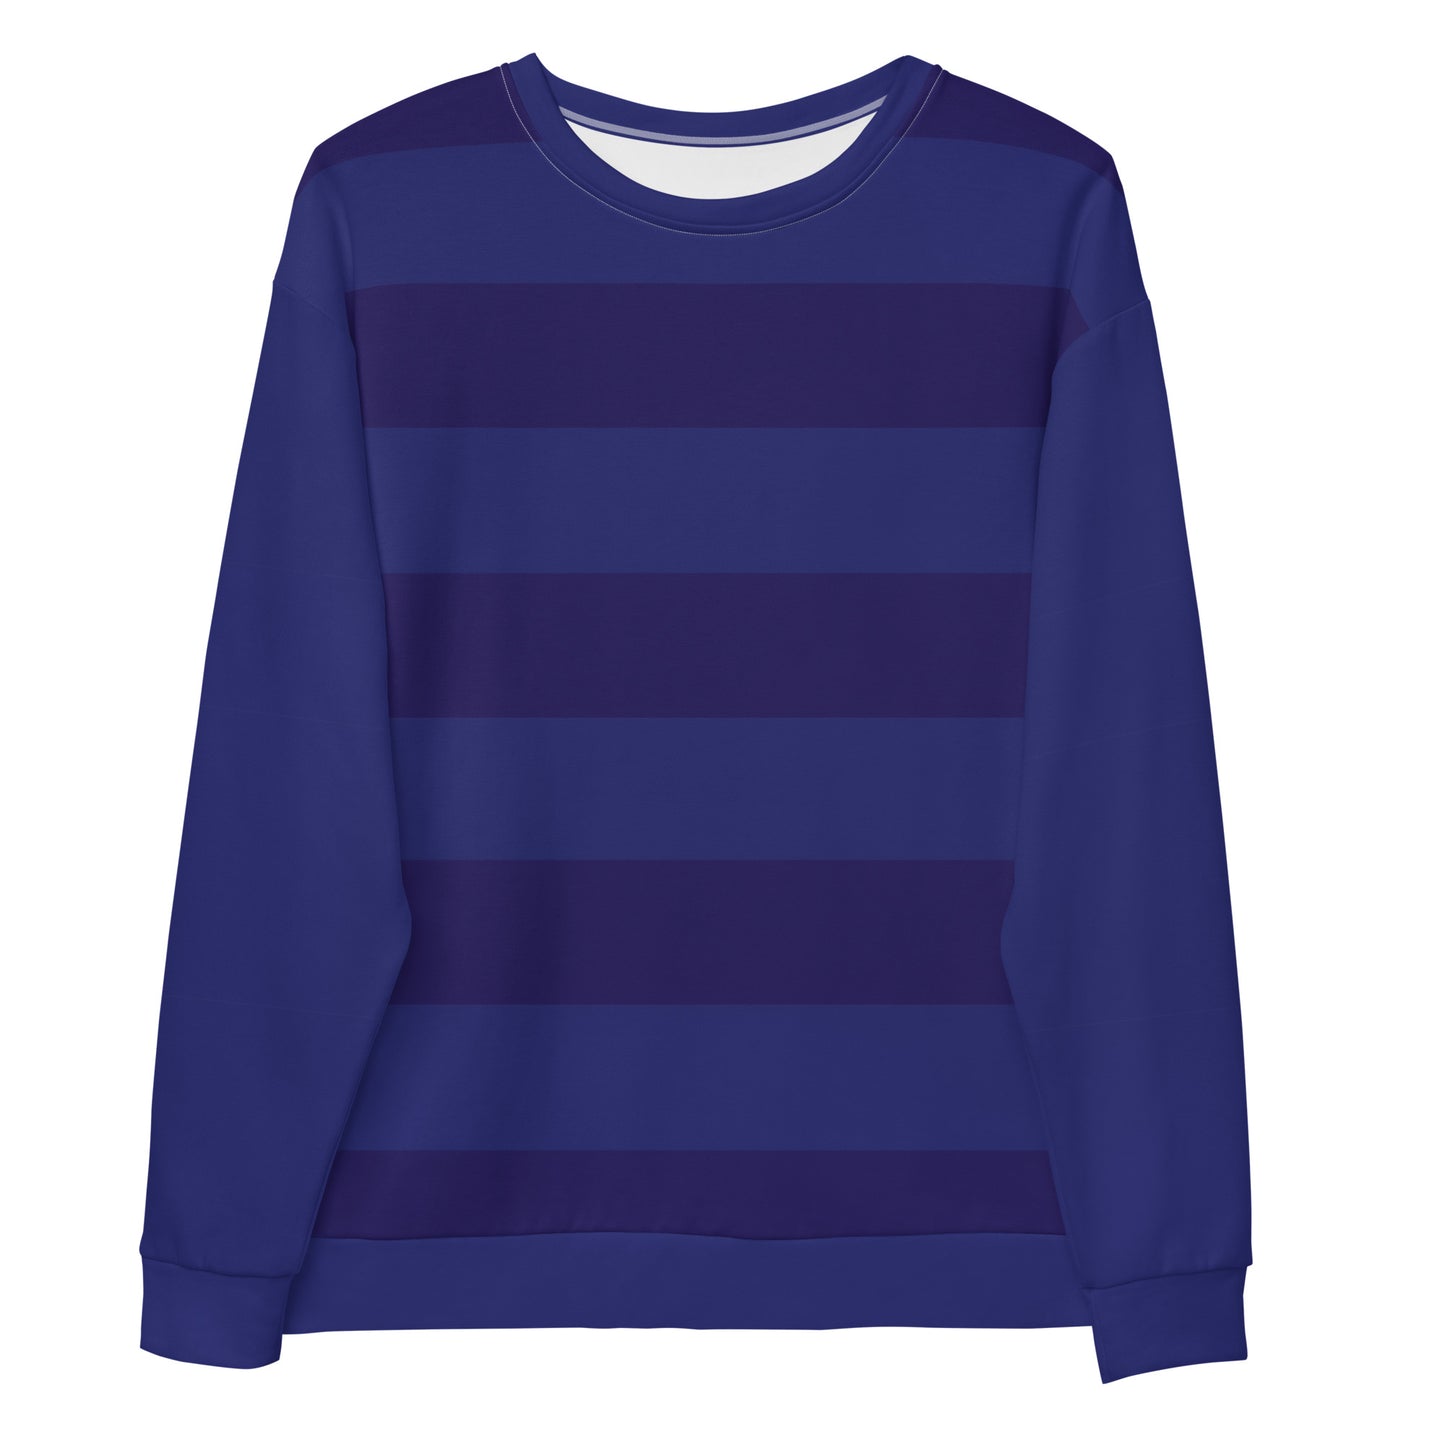 Sailor Blue - Sustainably Made Sweatshirt